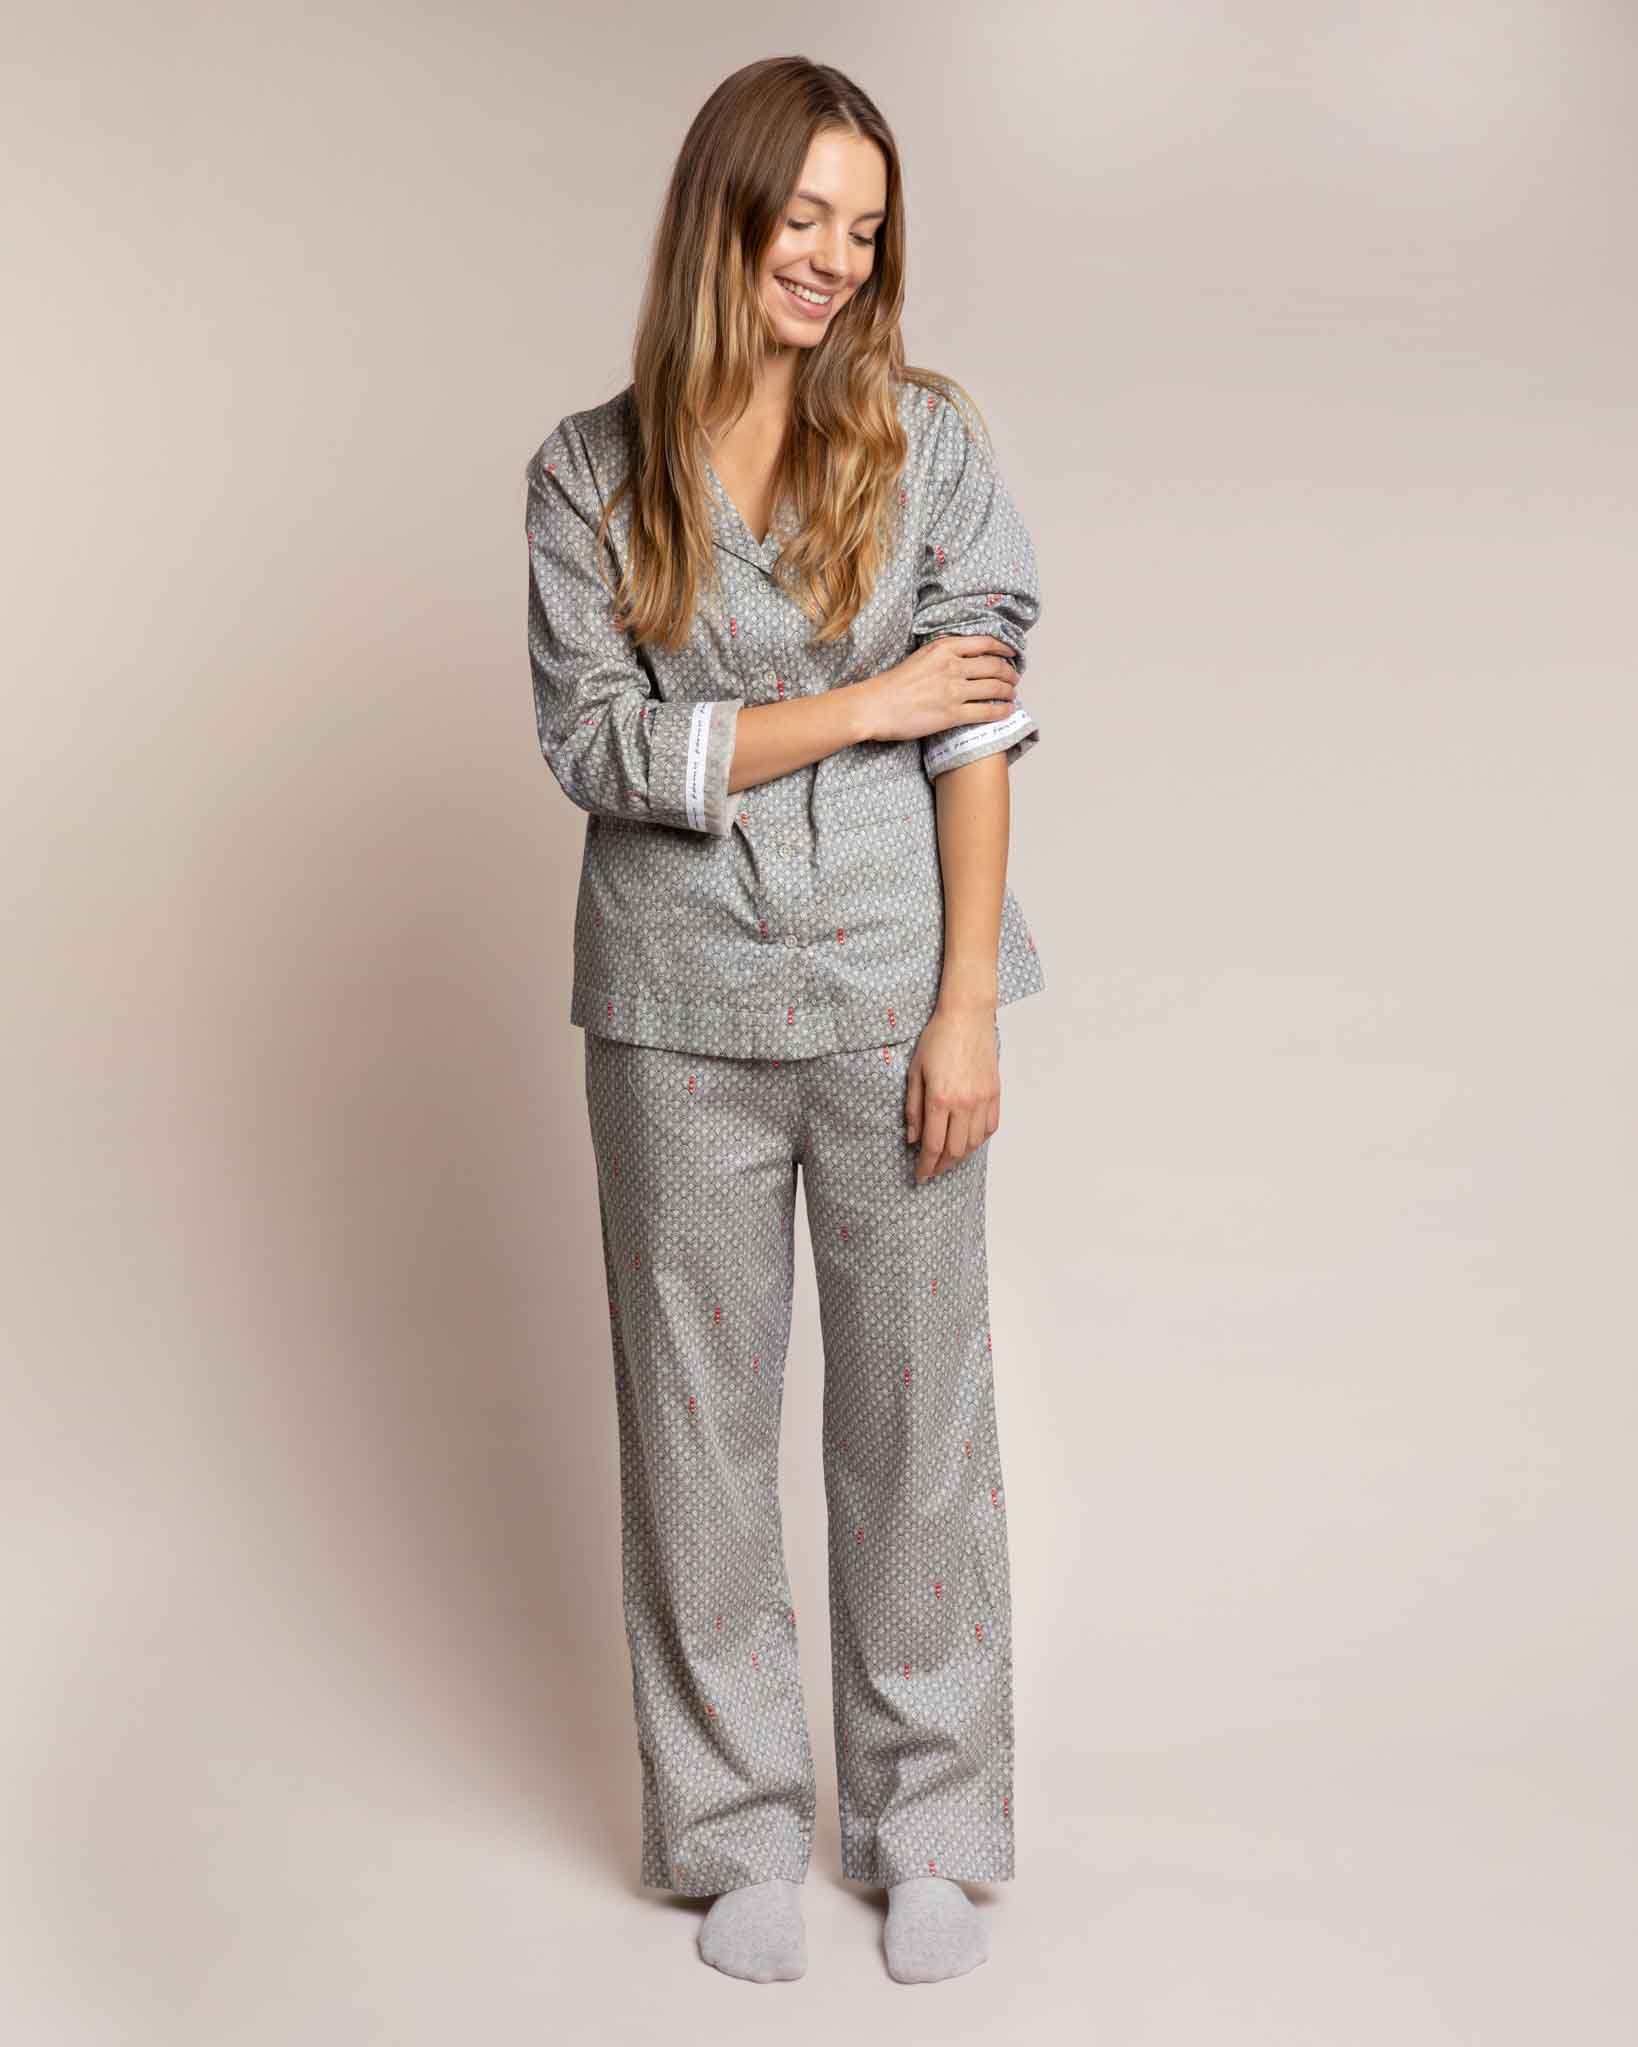 Kilometers pariteit ring Best pyjama brands - our guide to stylish sleepwear